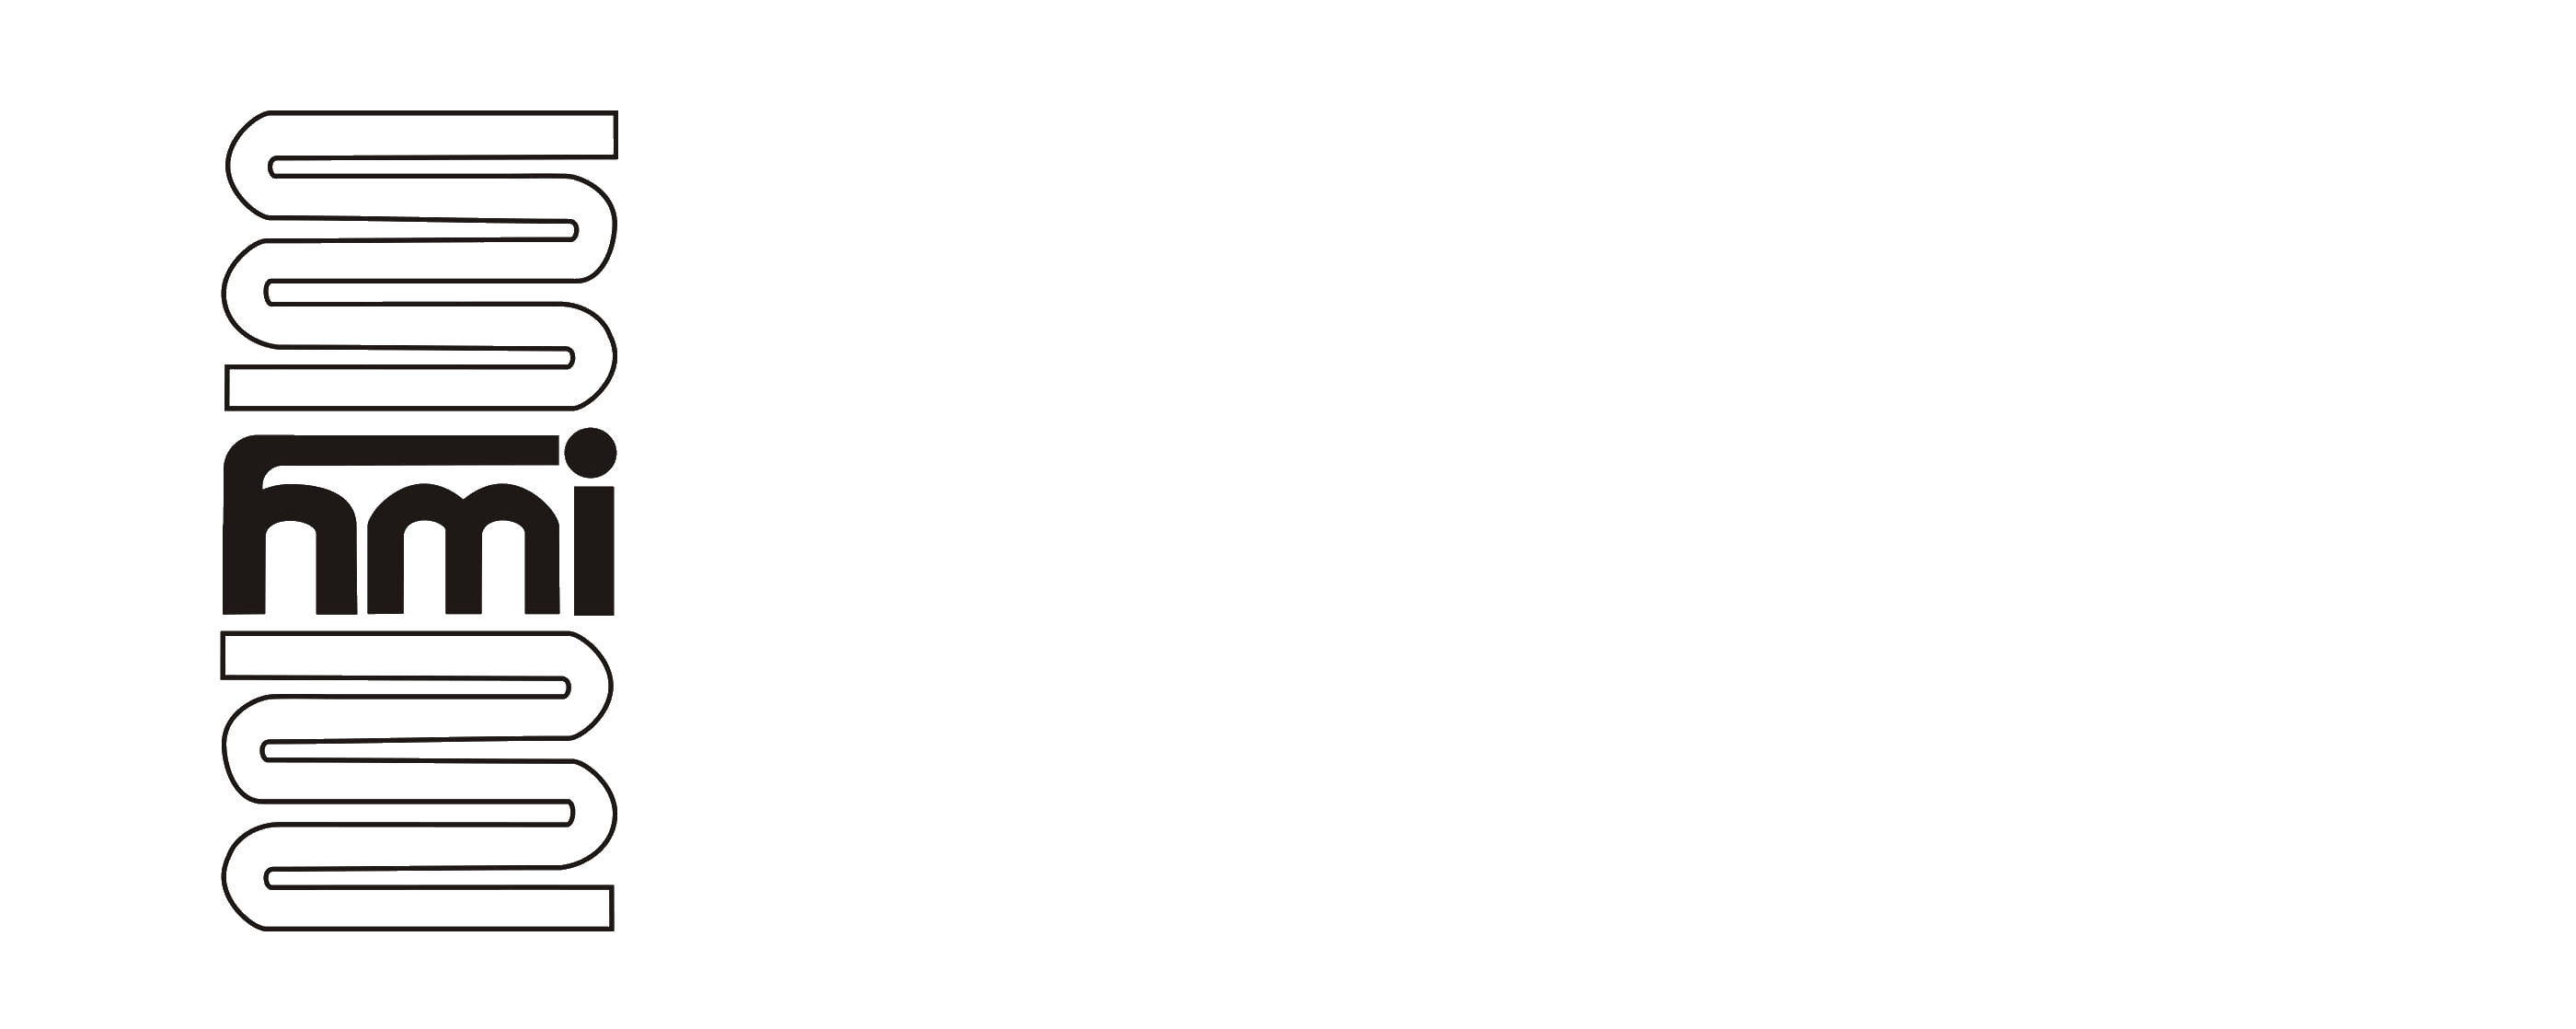 Hickory Mechanical